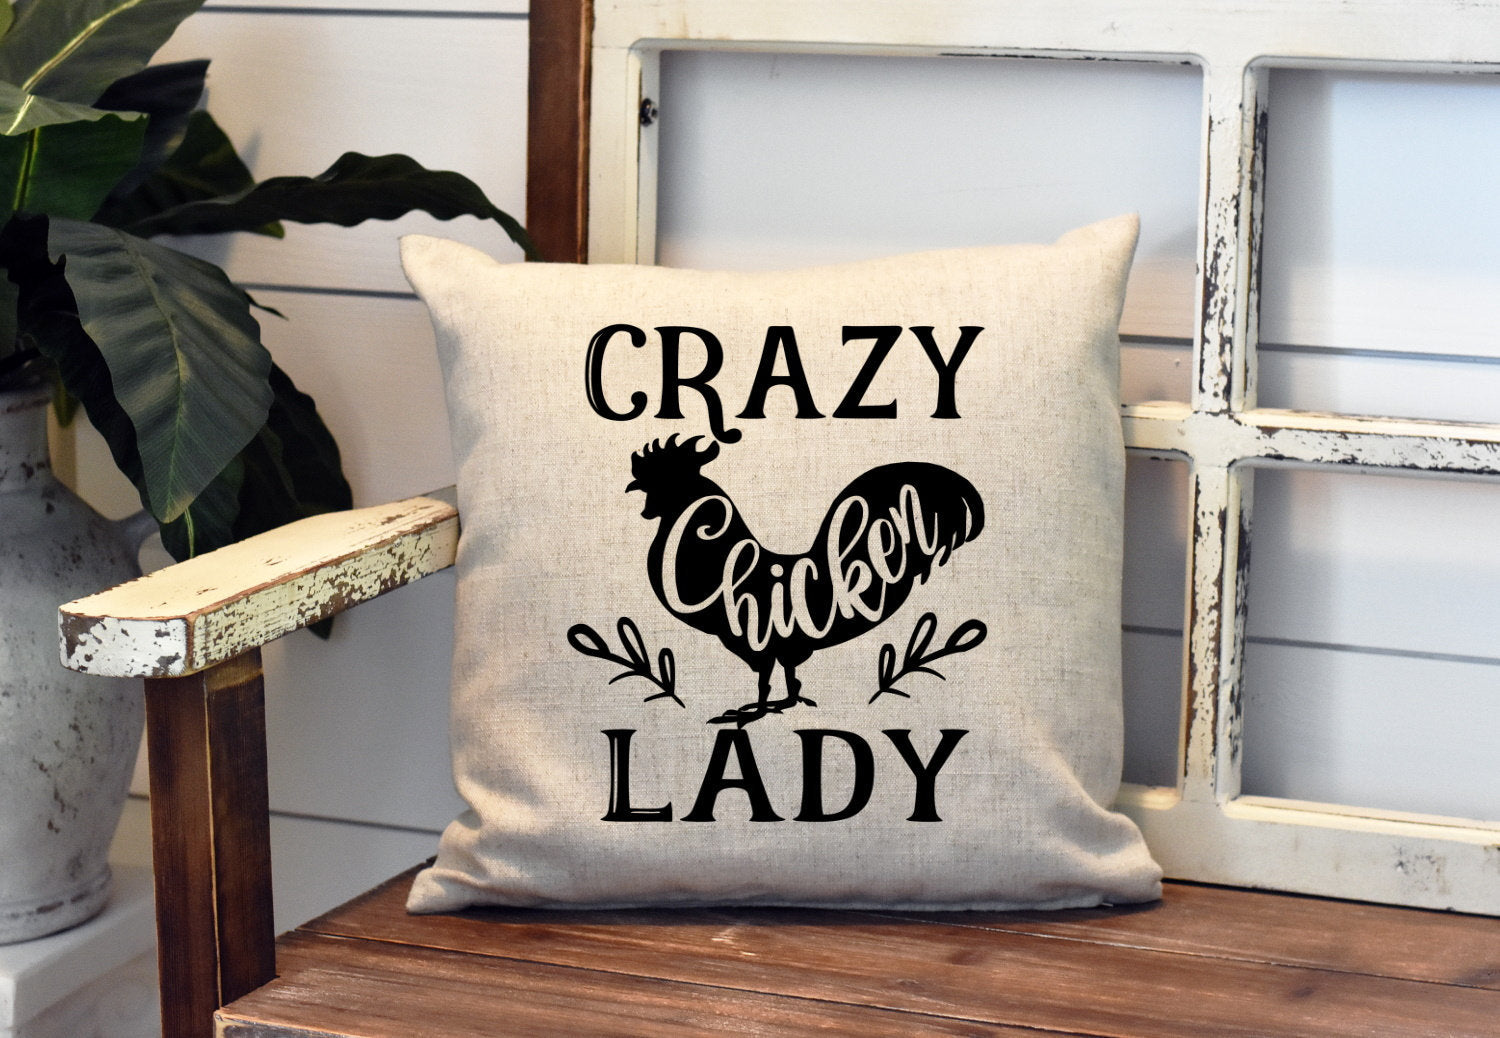 Crazy Chicken Lady Pillow Cover - Farm Pillow - Chicken Decorations Farmhouse Decor Throw Pillow Cover